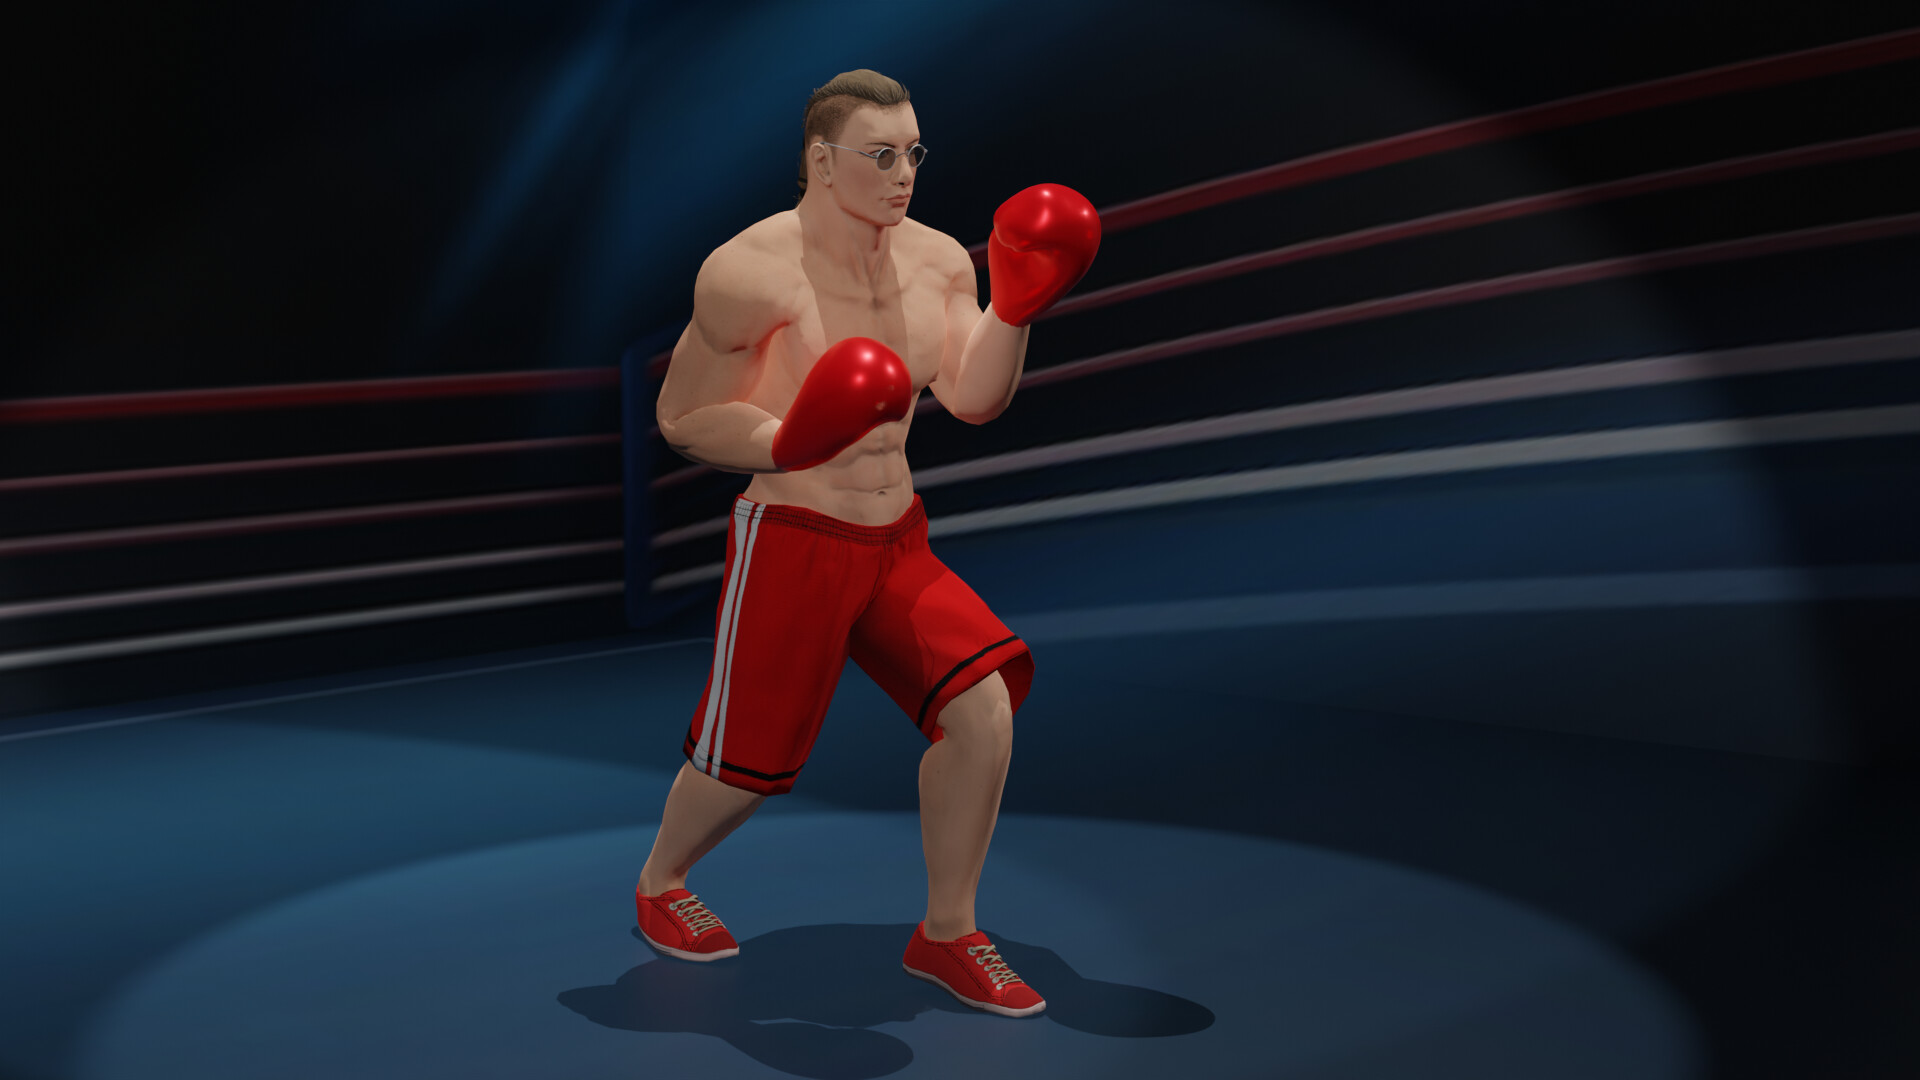 ArtStation - Traditional animation (boxing)